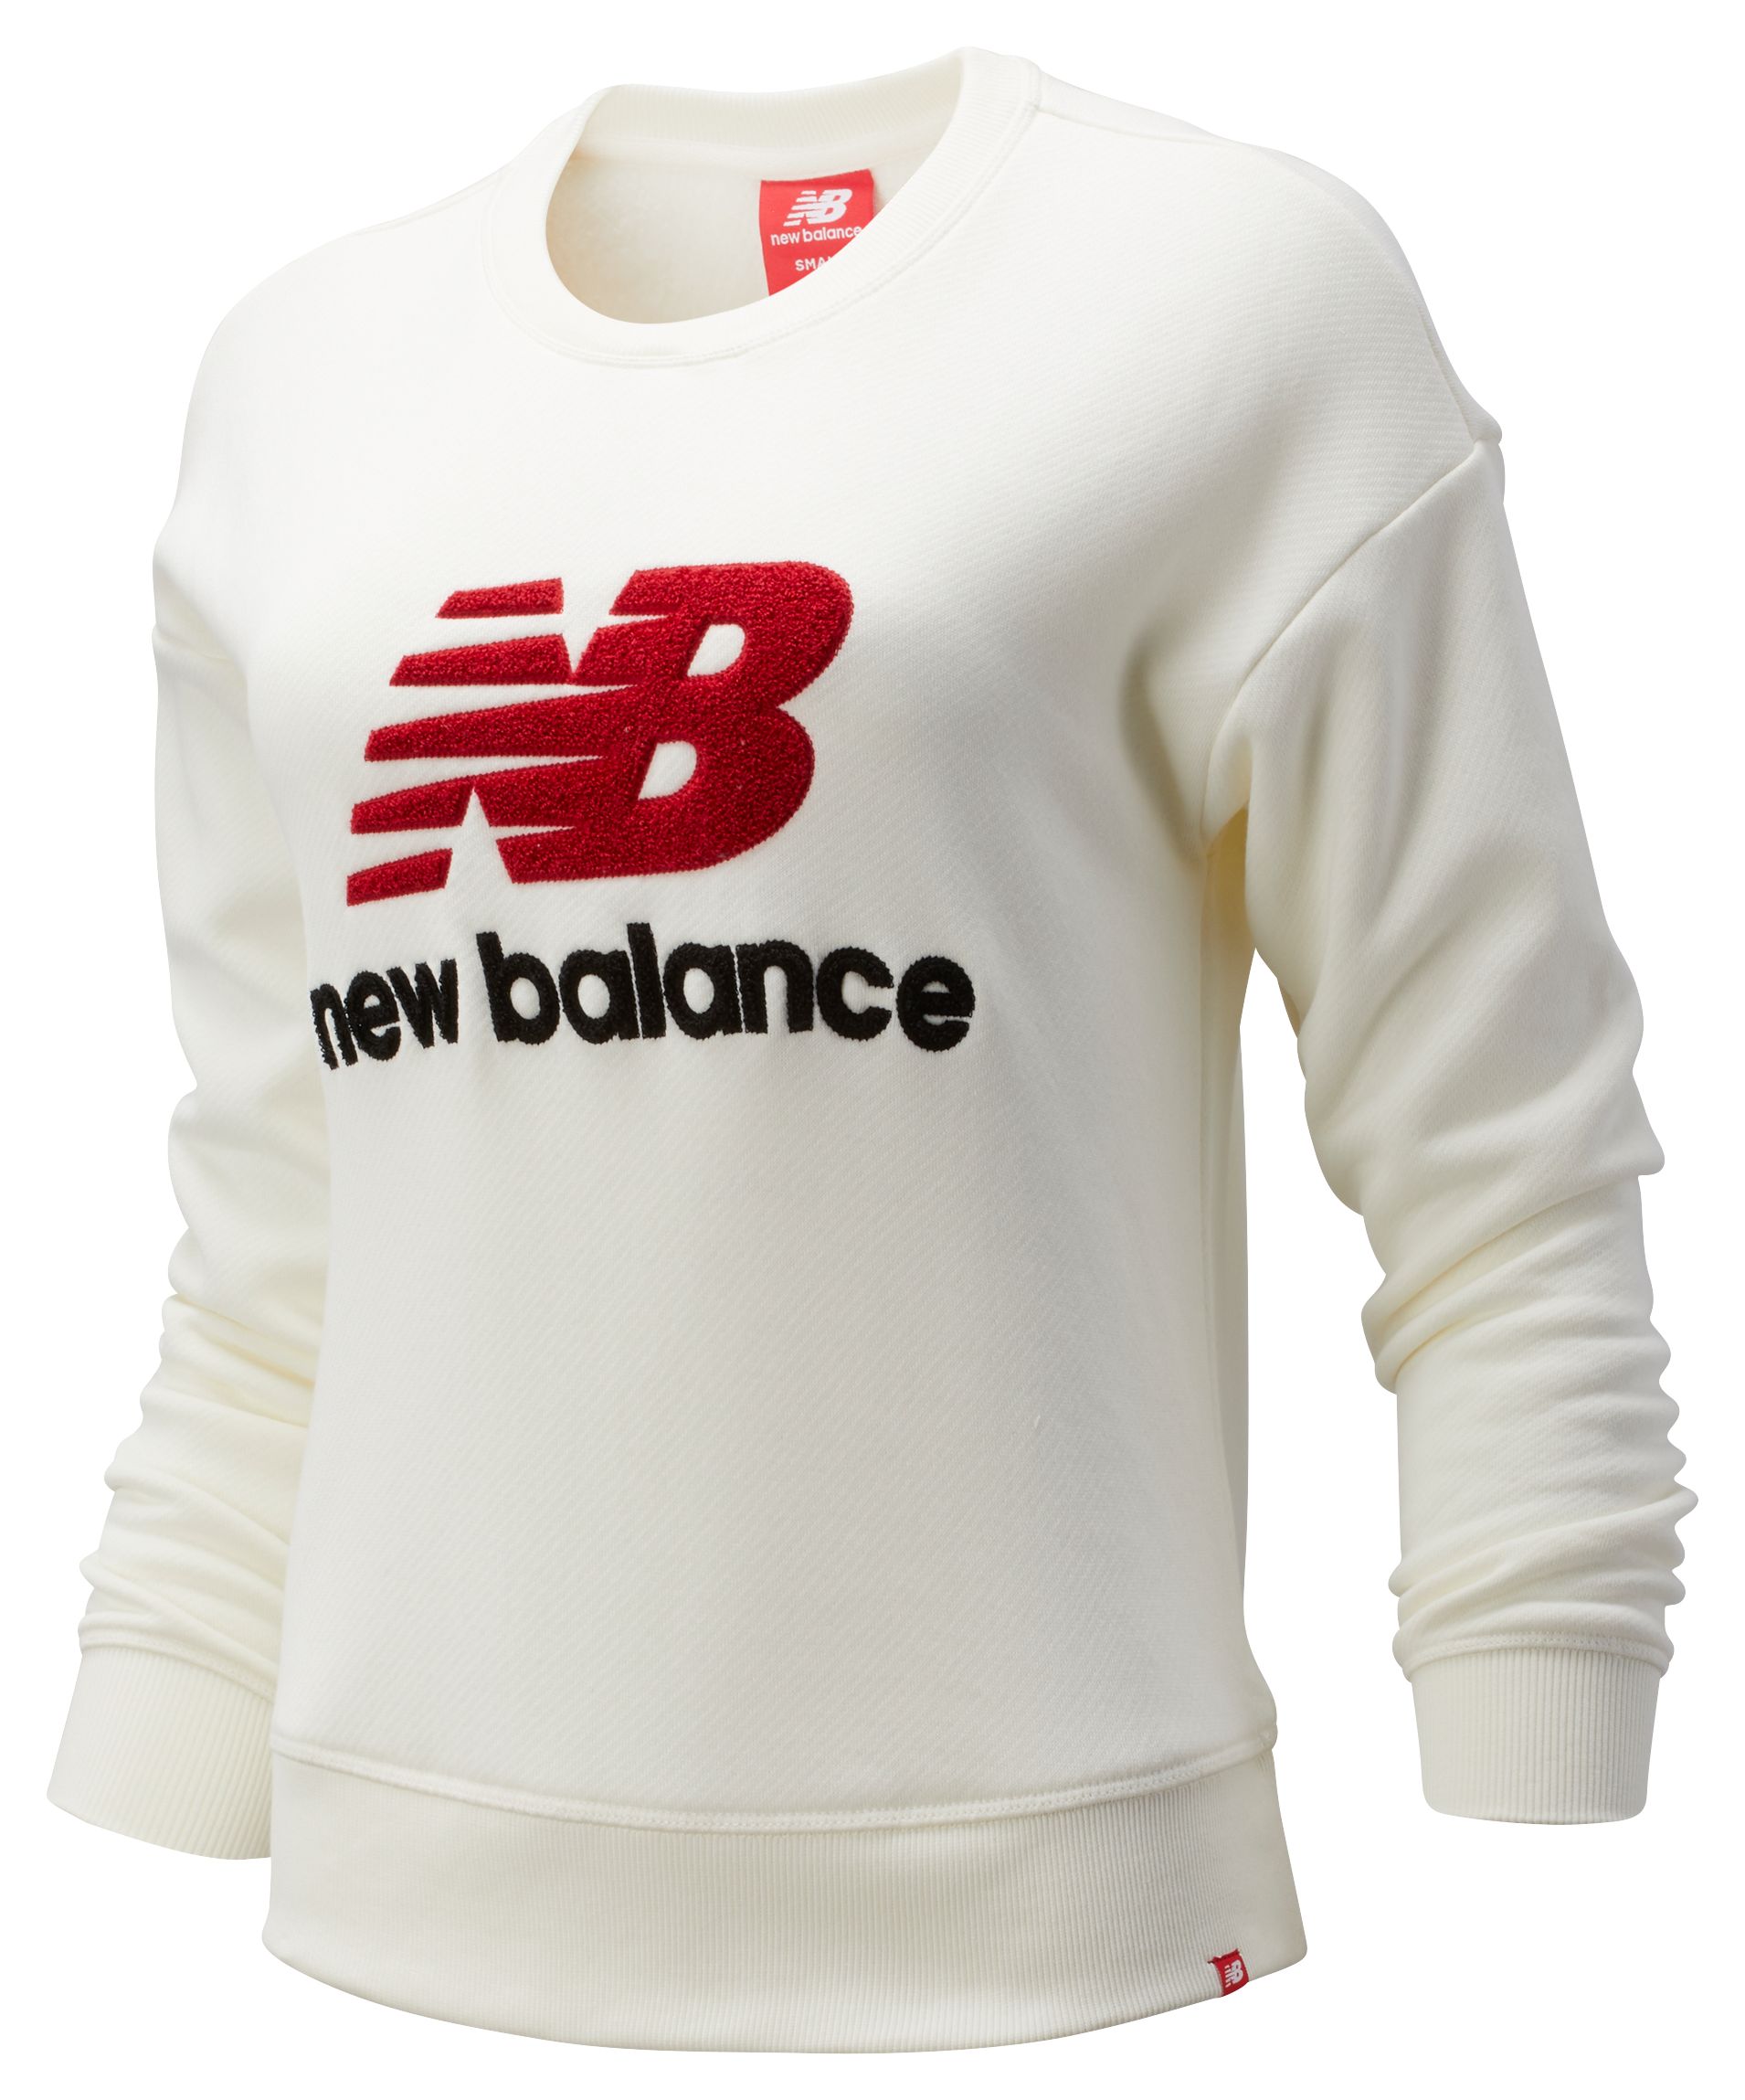 NB Athletics Stadium Crew - New Balance